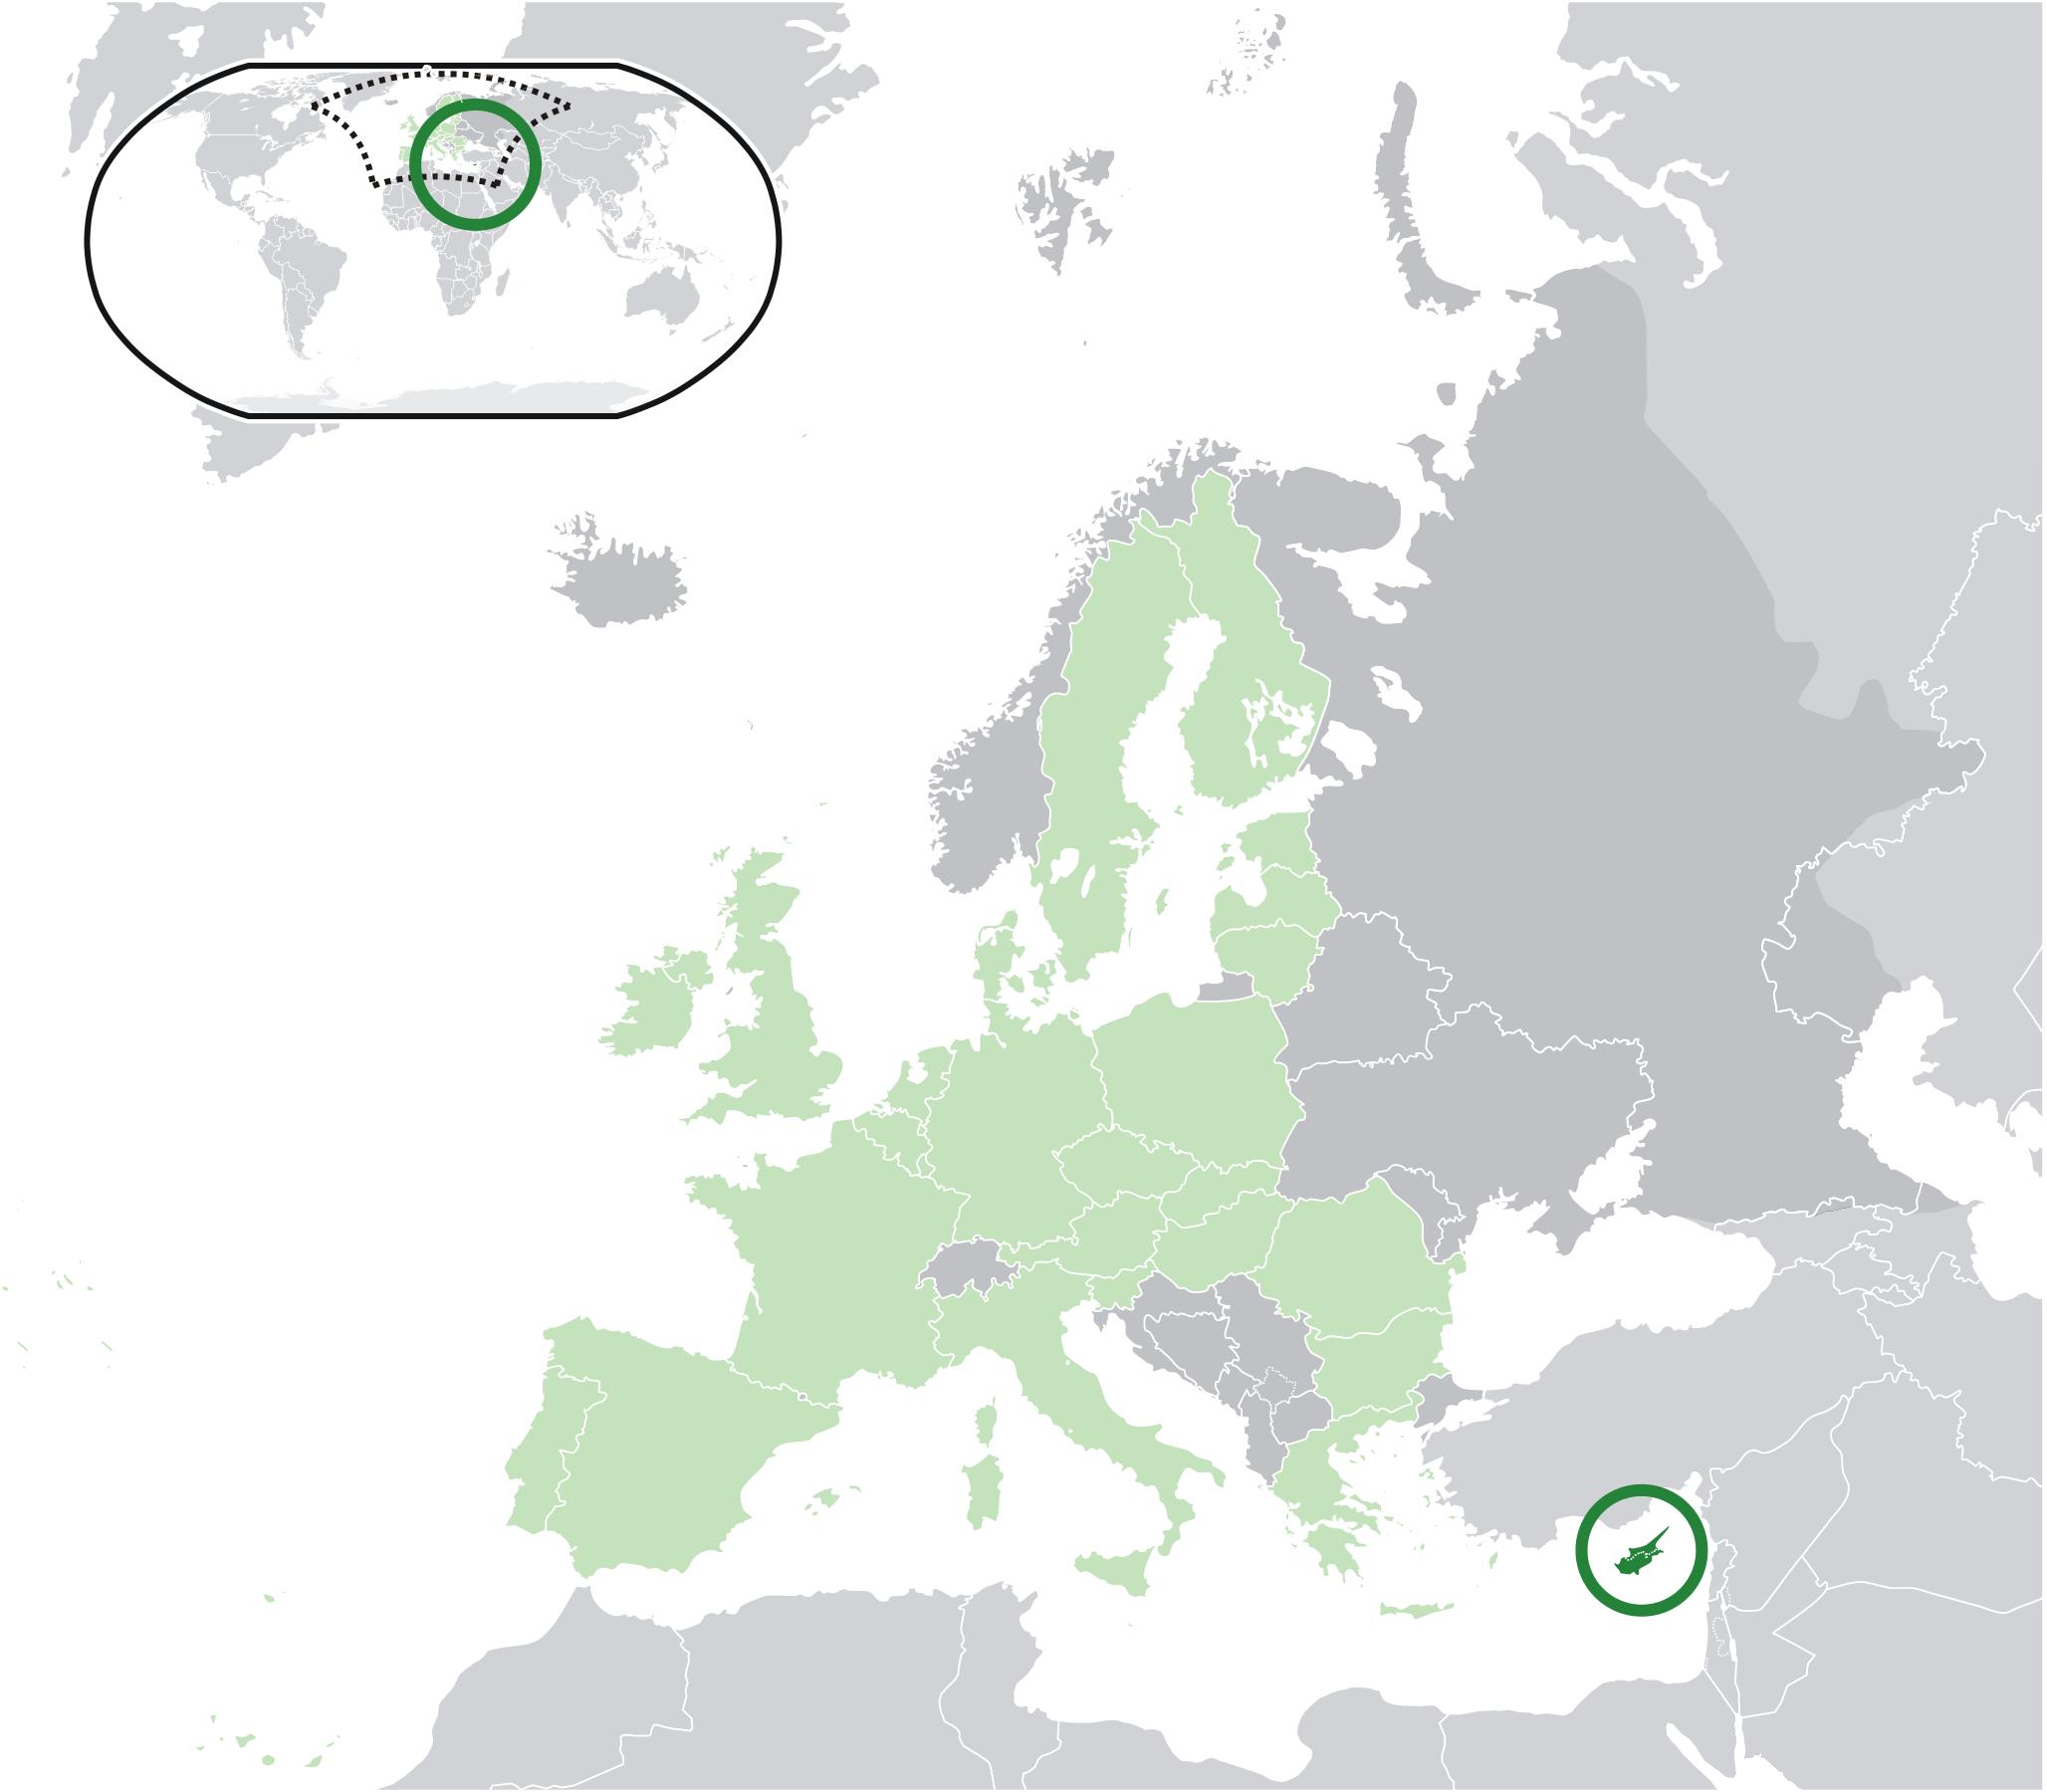 kypros kartta eurooppa Kyproksen Kartta Eurooppa Euroopan Kartta Osoittaa Kypros Etela Euroopassa Eurooppa kypros kartta eurooppa